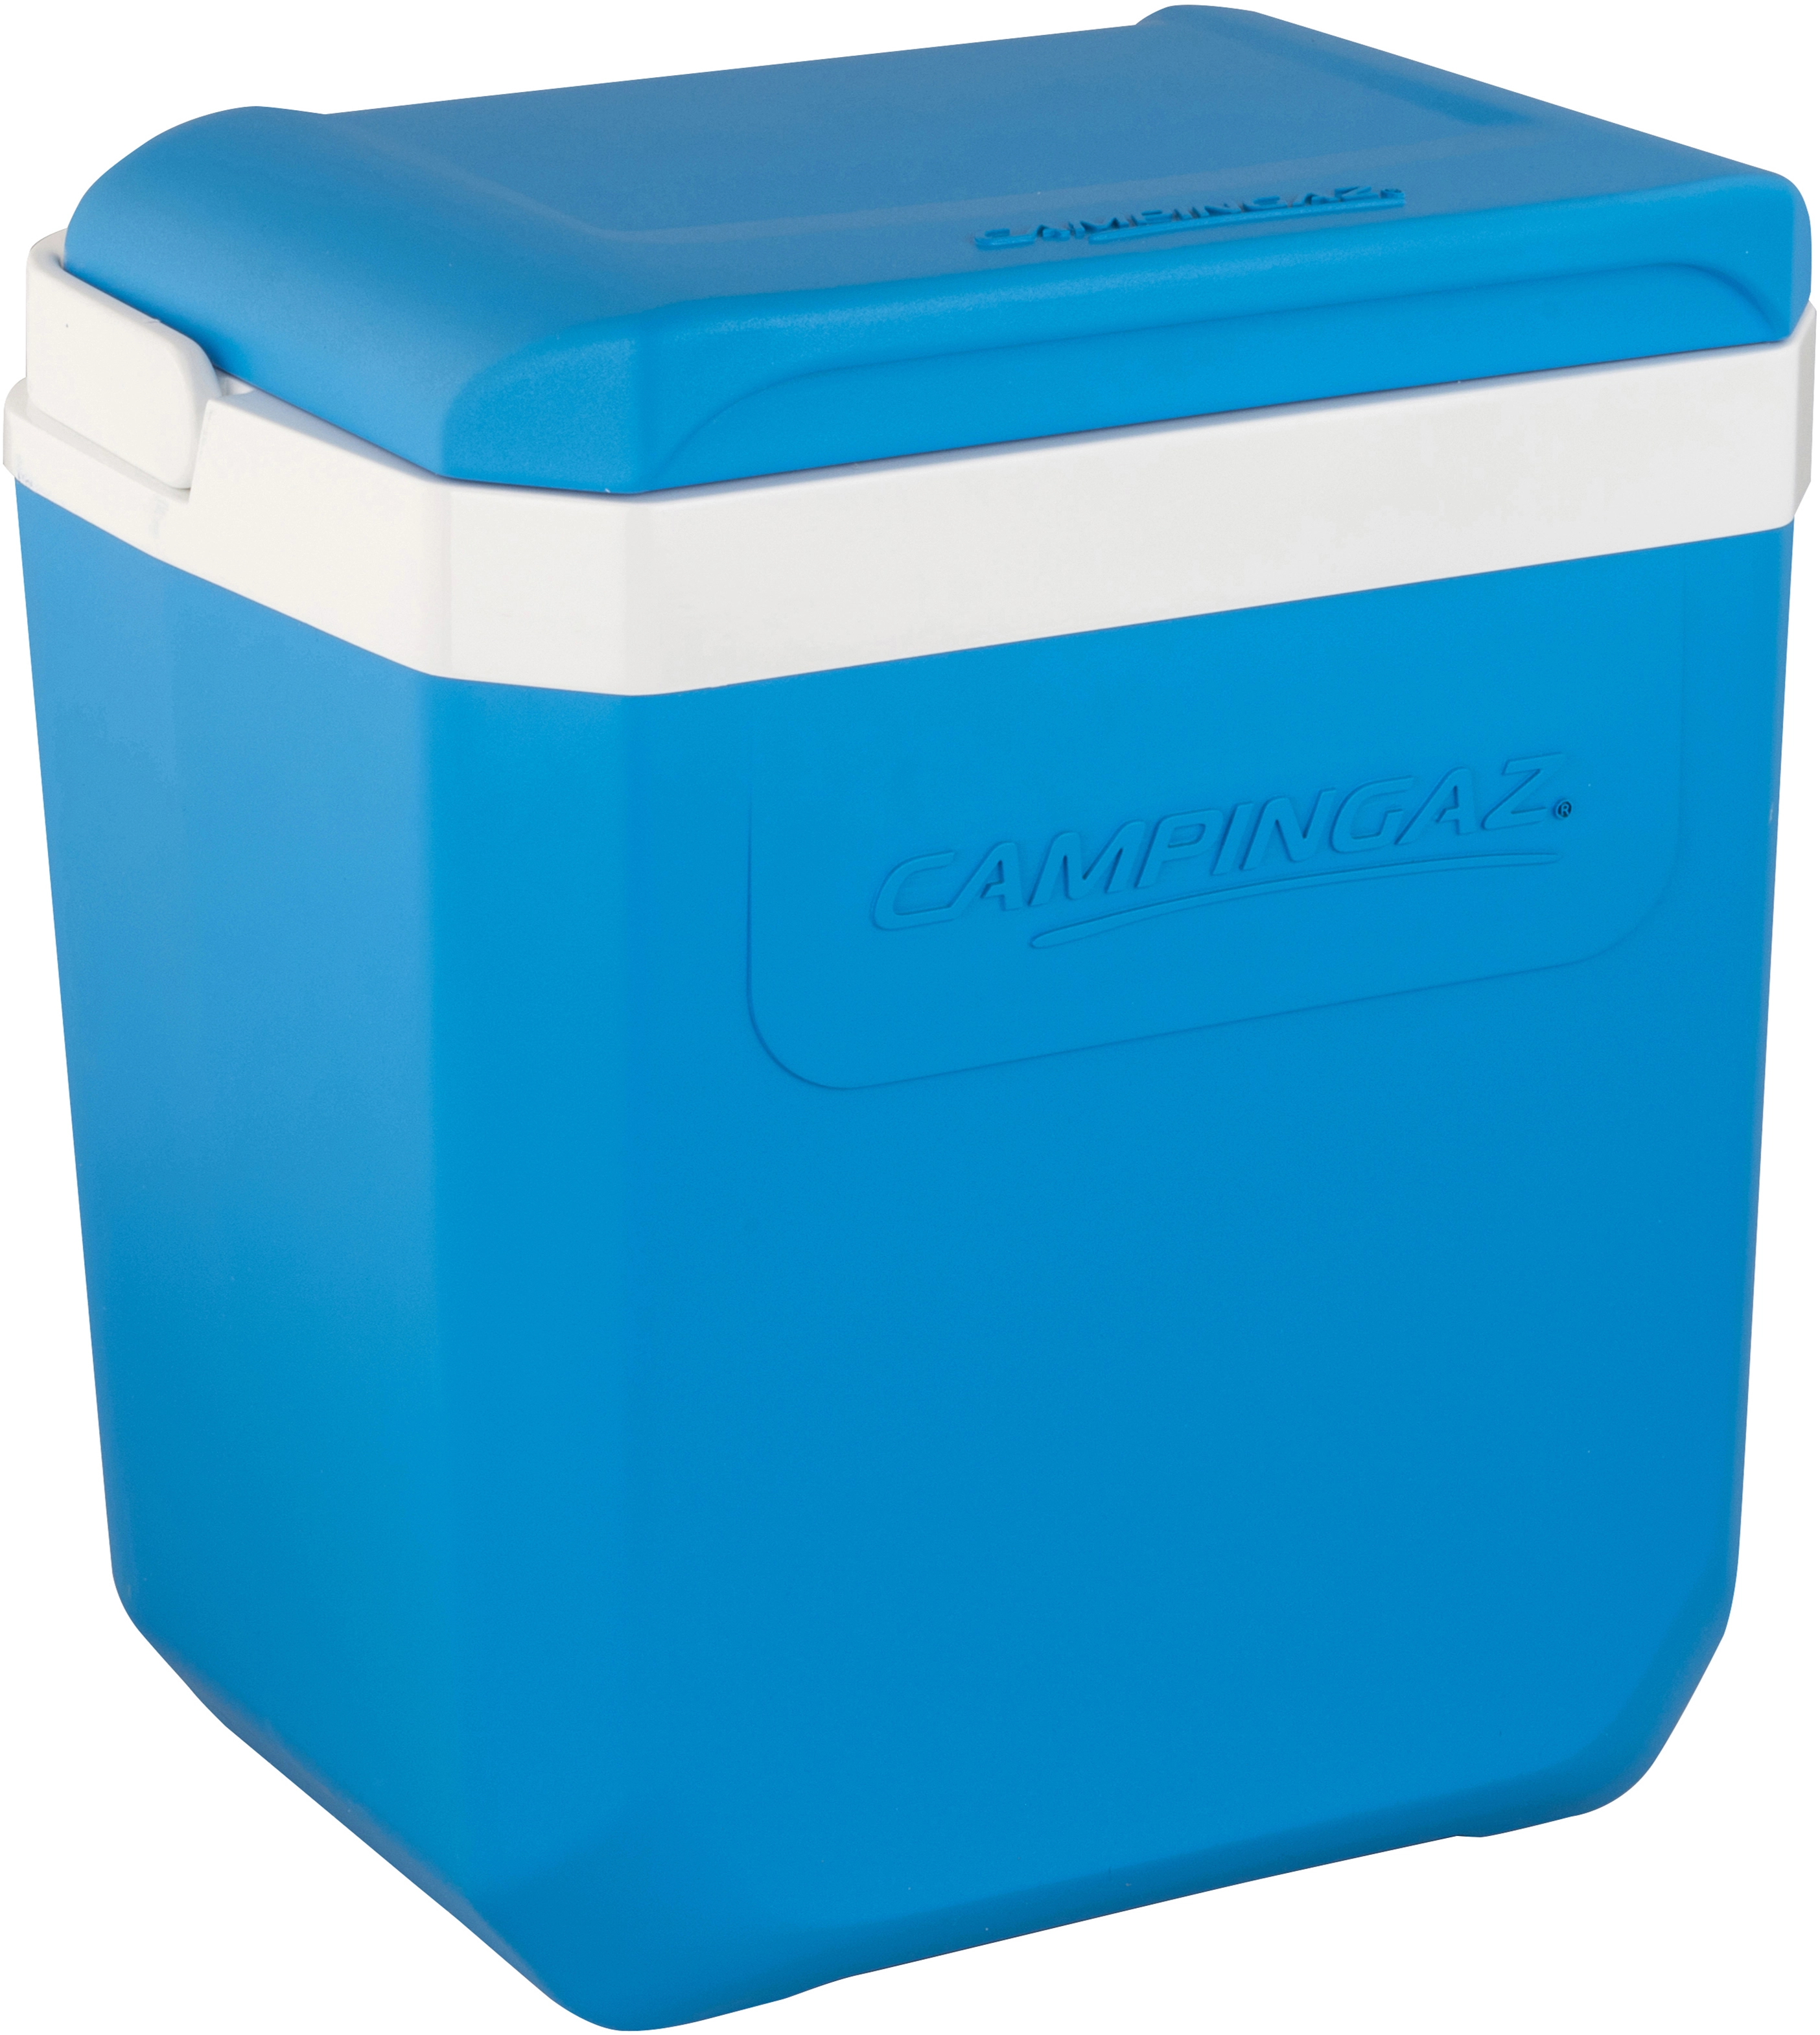 Petromax Kühlbox 50 Liter sandfarben, 289,99 €